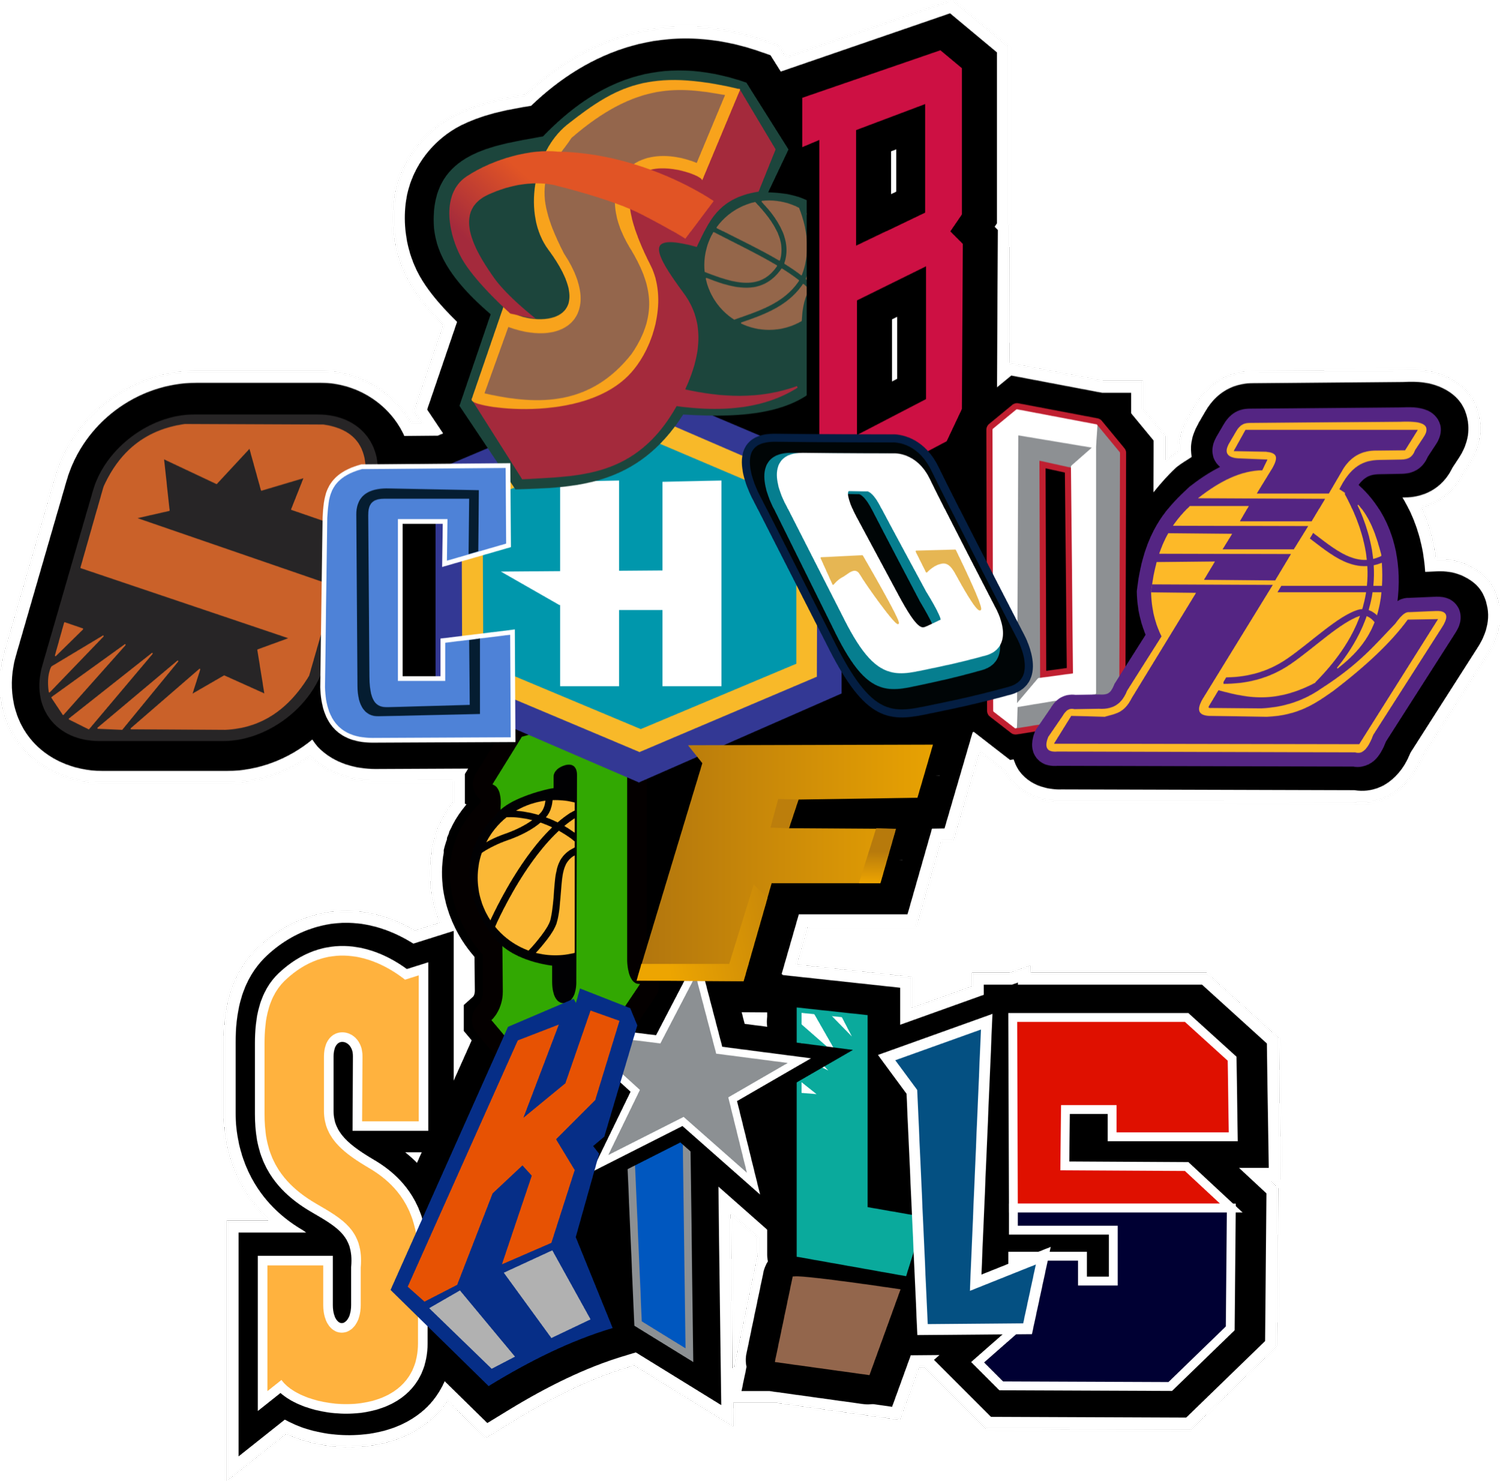 Santa Barbara School of Skills